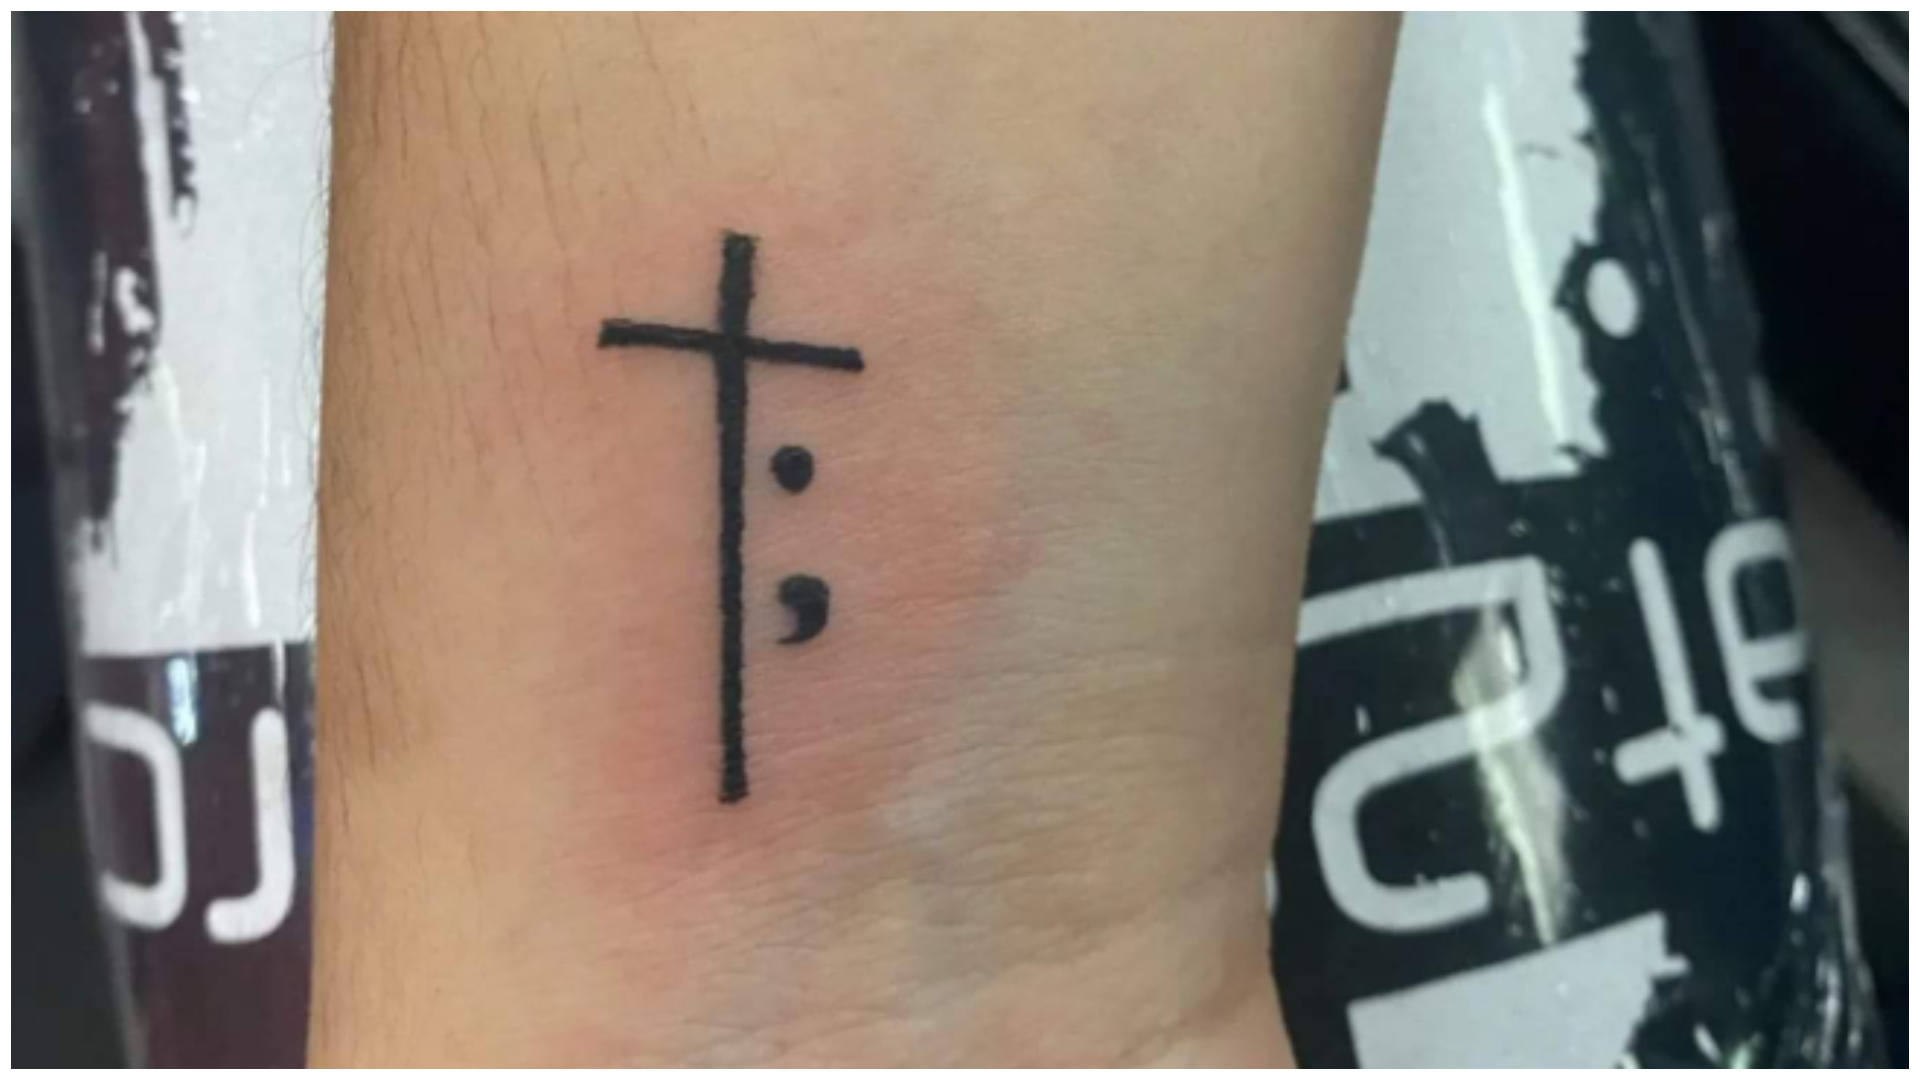 Semicolon tattoo meaning